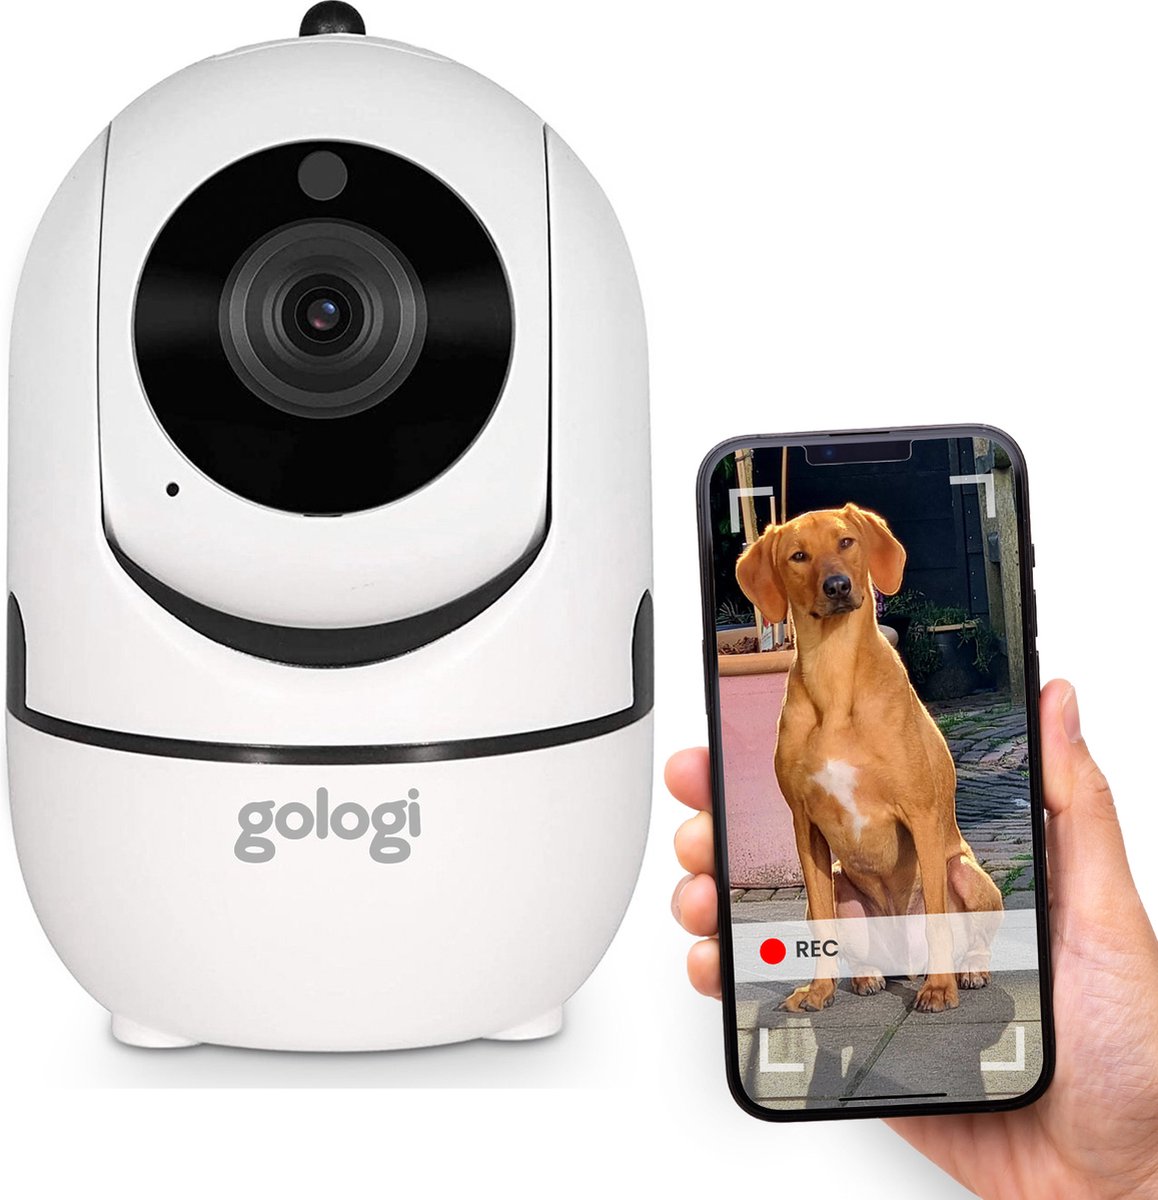 Gologi huisdiercamera - Hondencamera - Pet camera - Beveiligingscamera - Security camera - Voor alle huisdieren - Met wifi